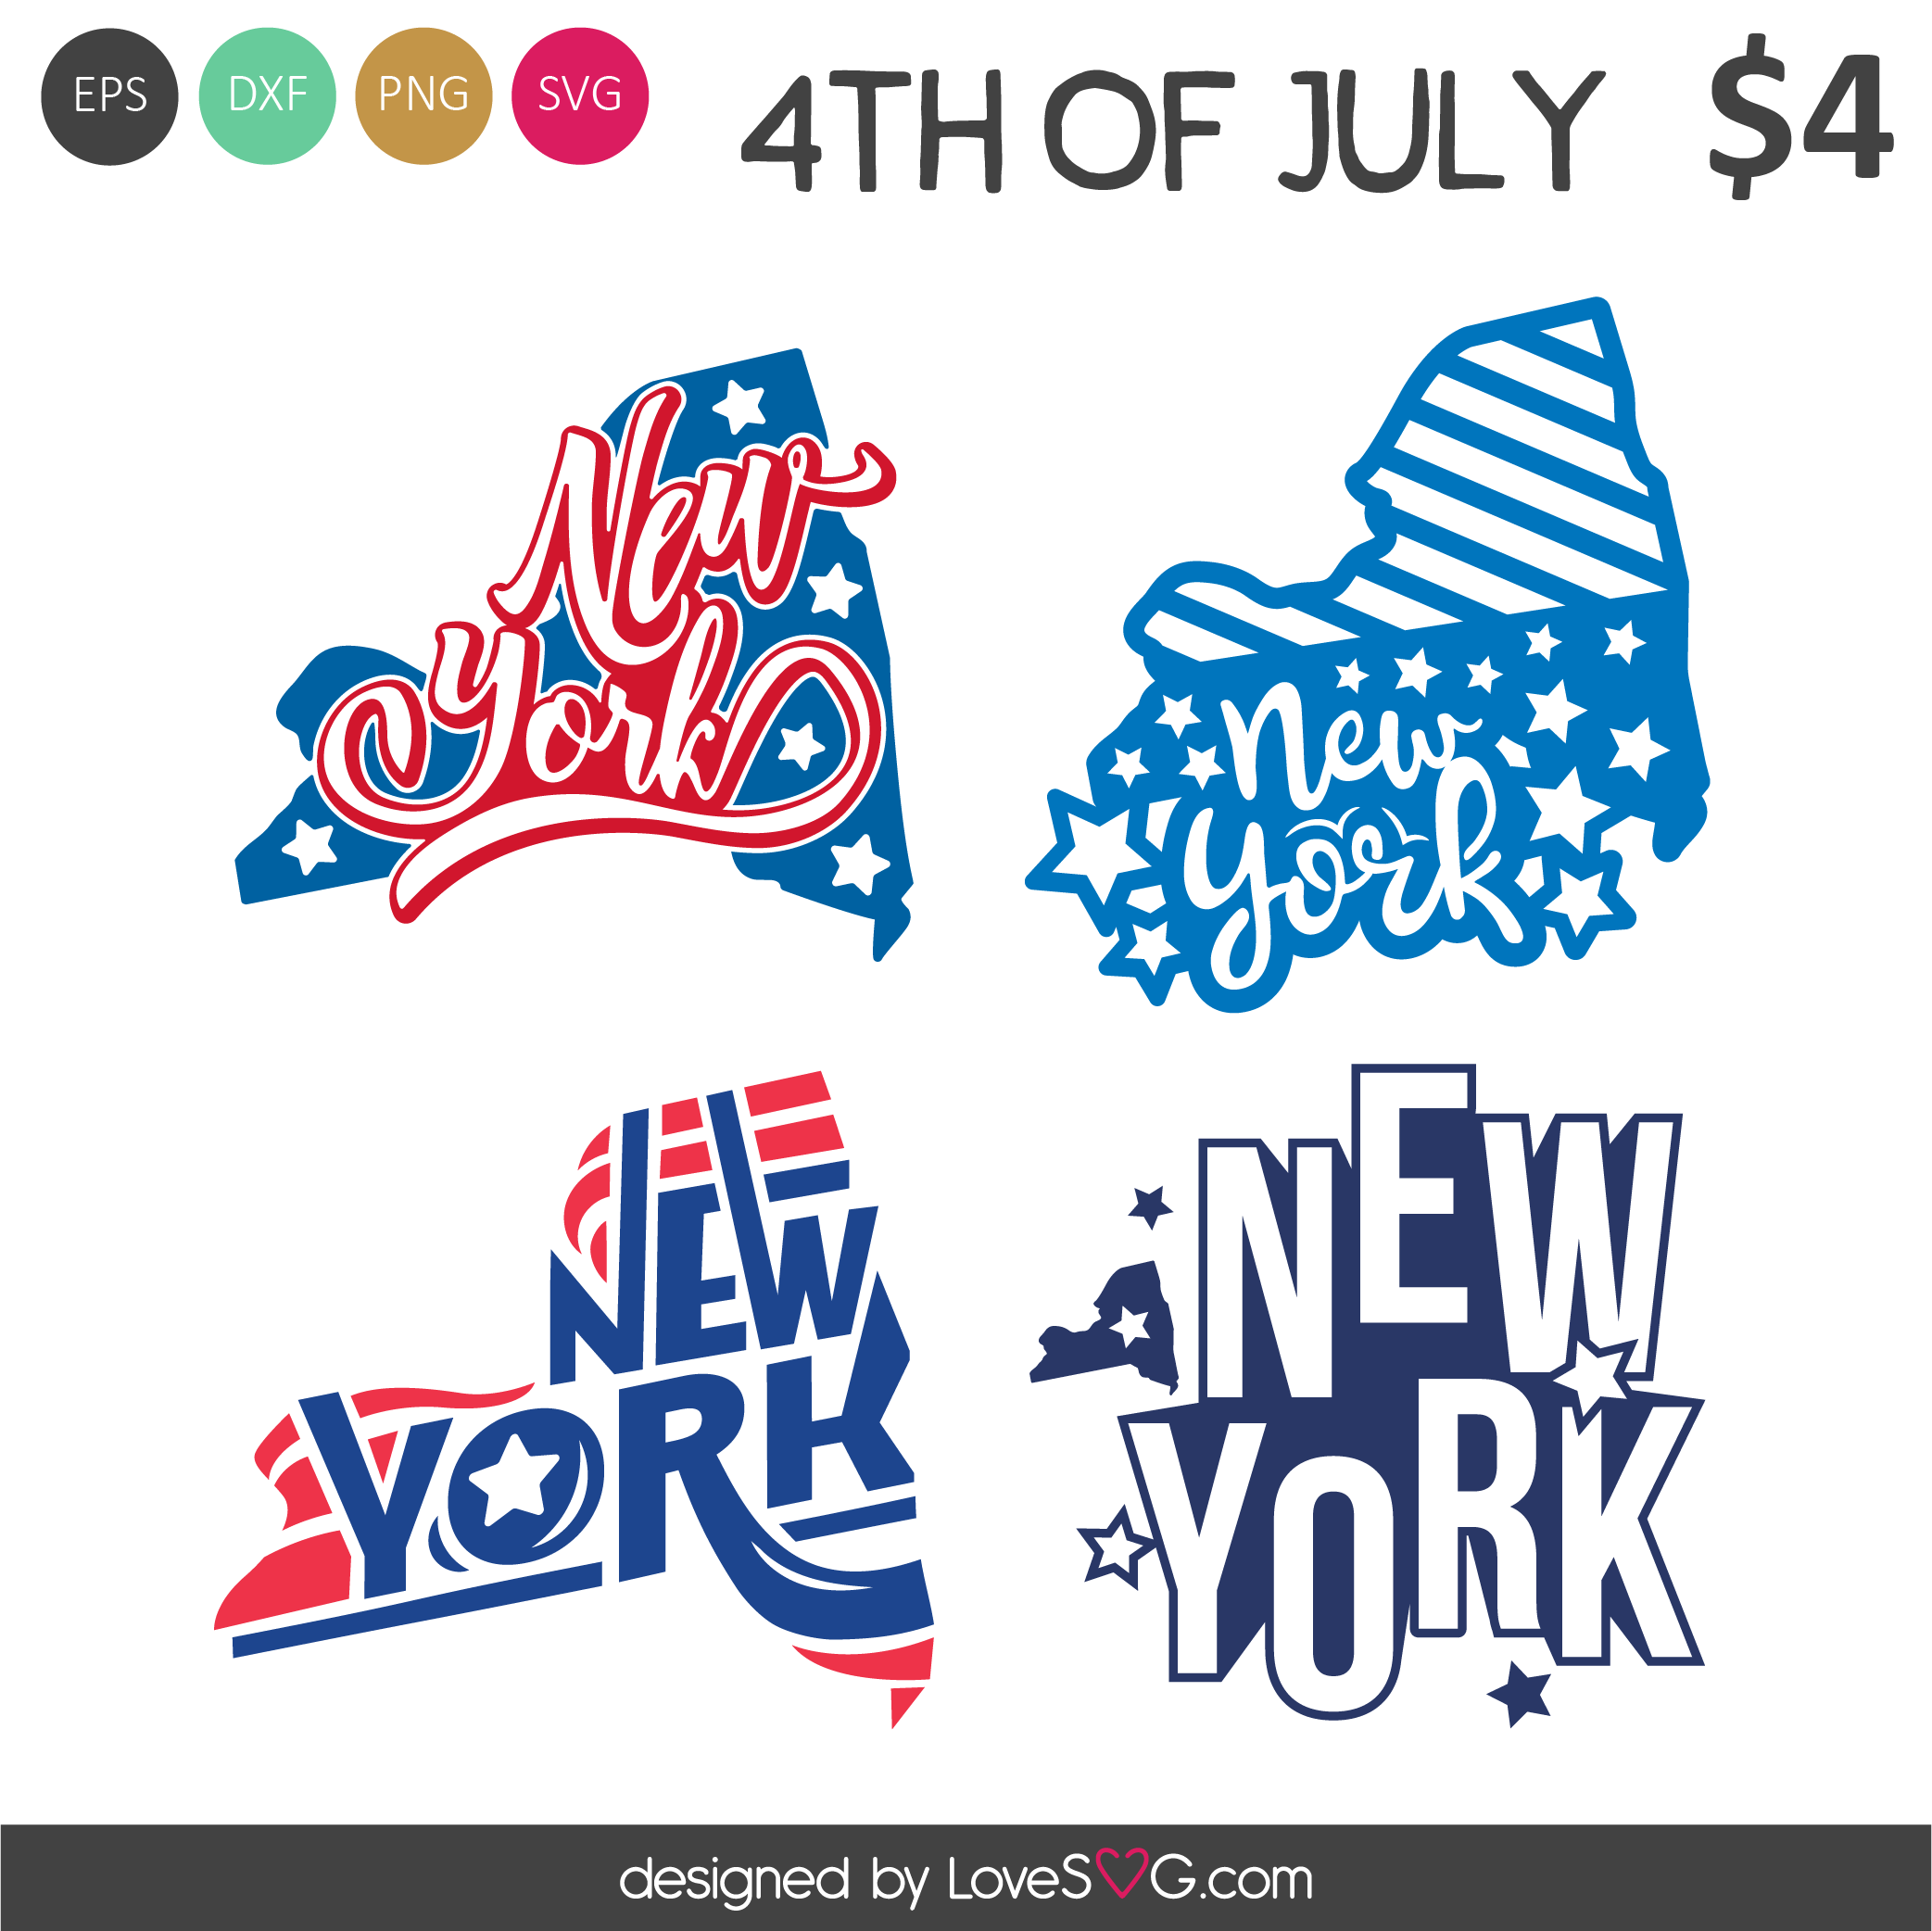 New York SVG Cut Files - Lovesvg.com